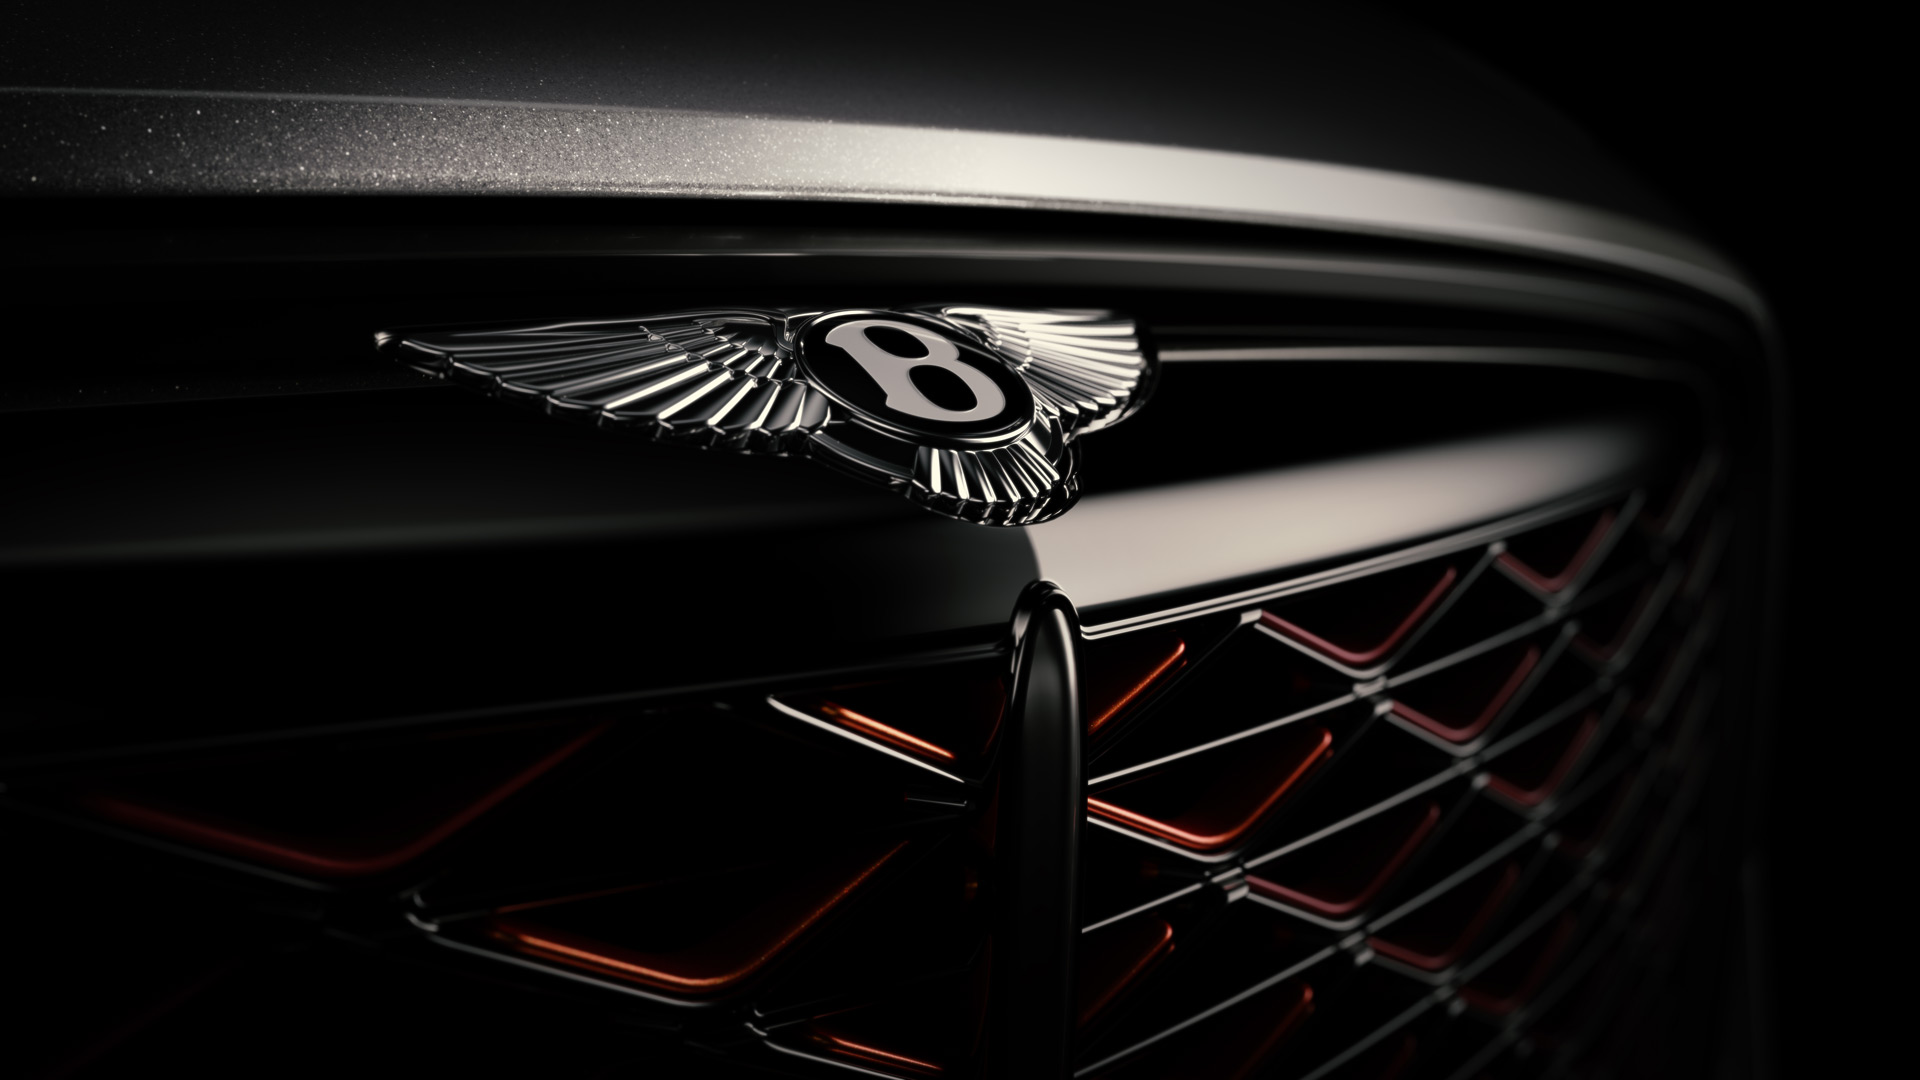 1660127297 Bentley Batur bespoke special previews brands new design language